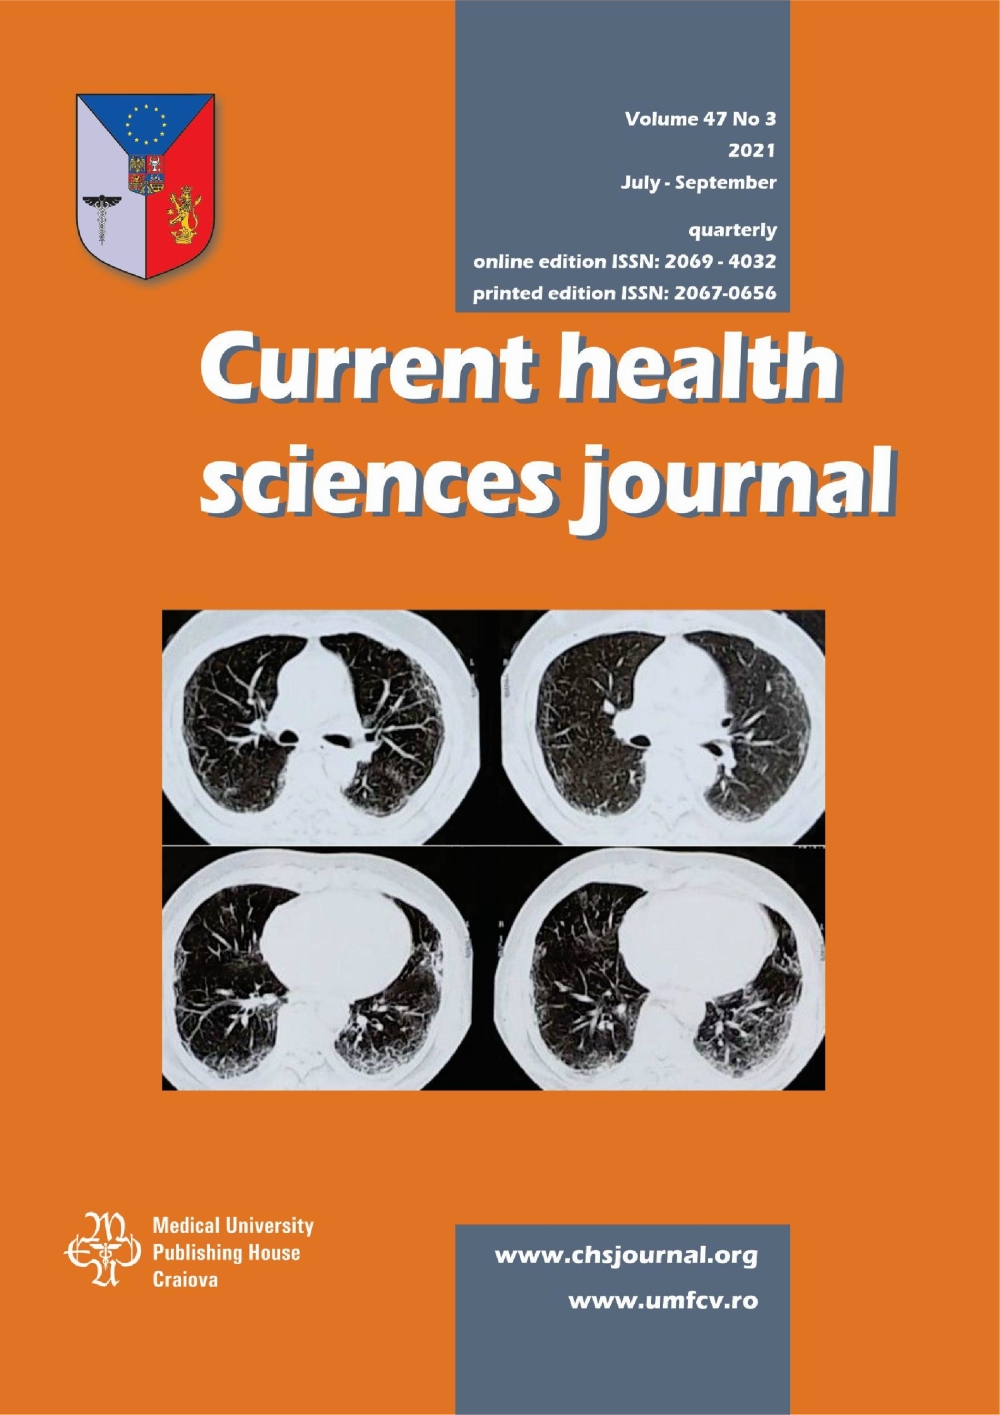 Current Health Sciences Journal, vol. 47 no. 3, 2021